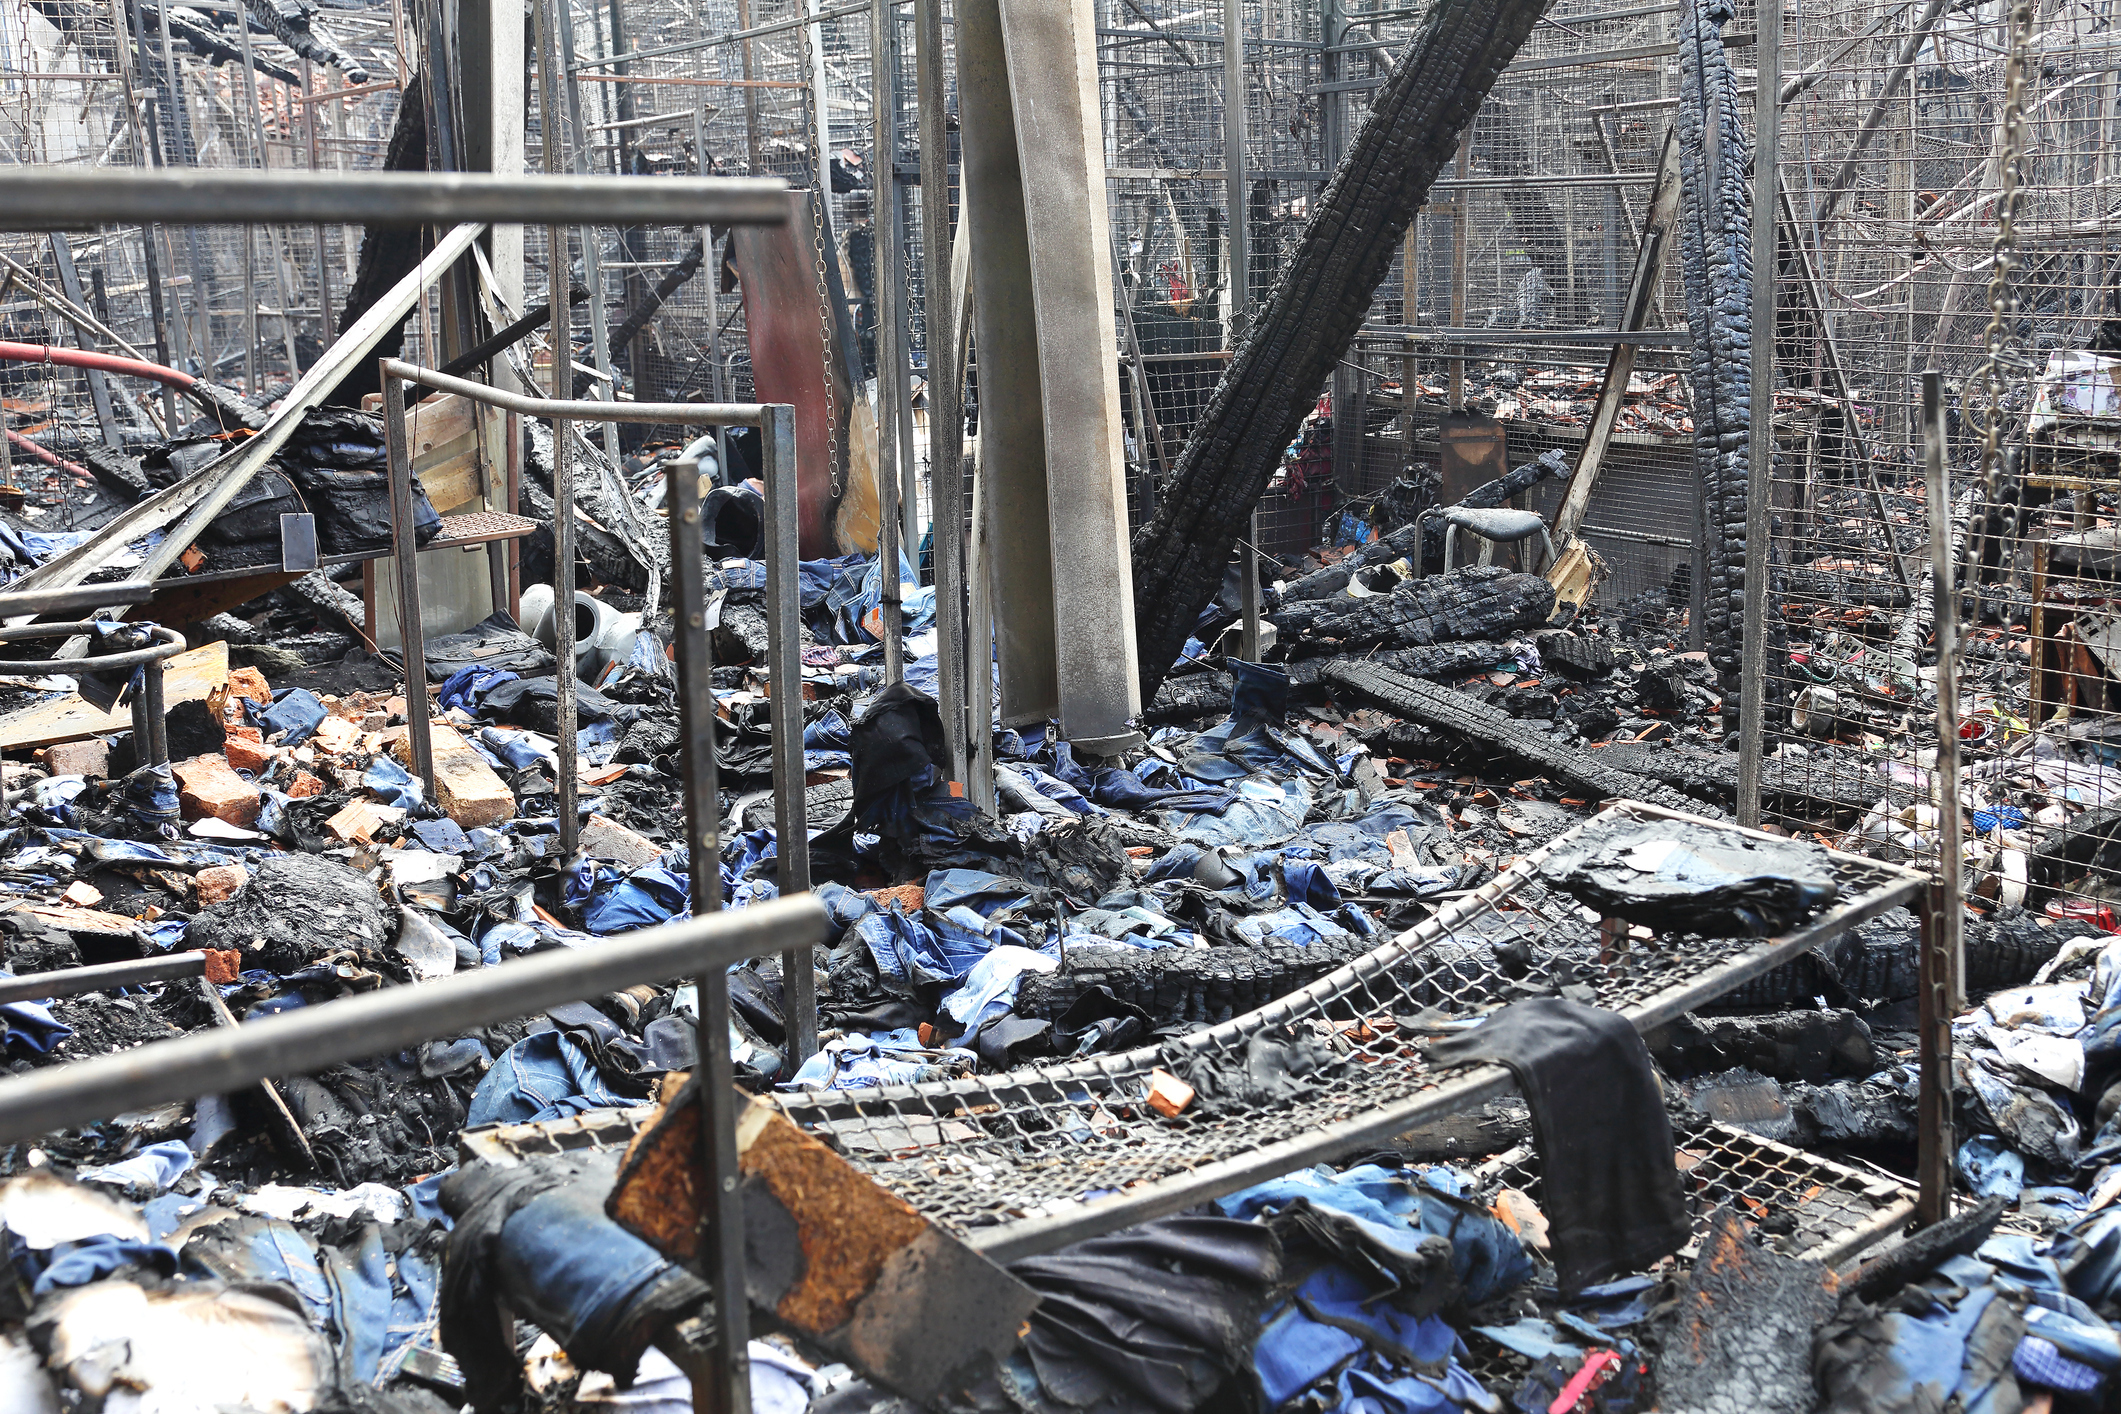 Burned sweatshop garment factory after fire disaster